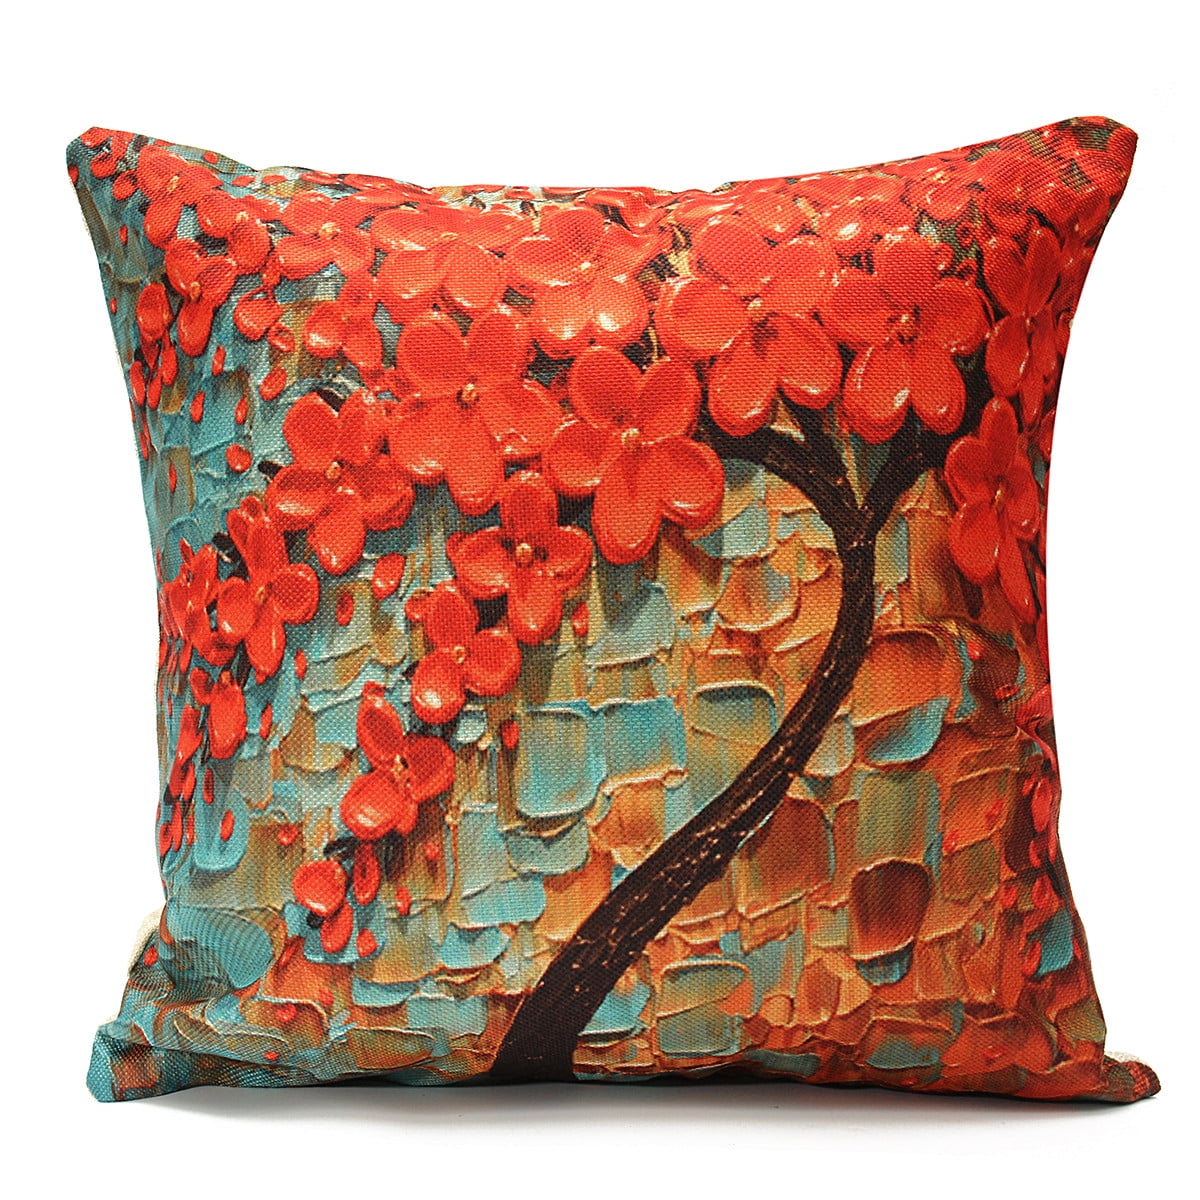 Decorative Cushion Cover Accent Pillow Linen Contemporary Botanical Print Throw Pillow